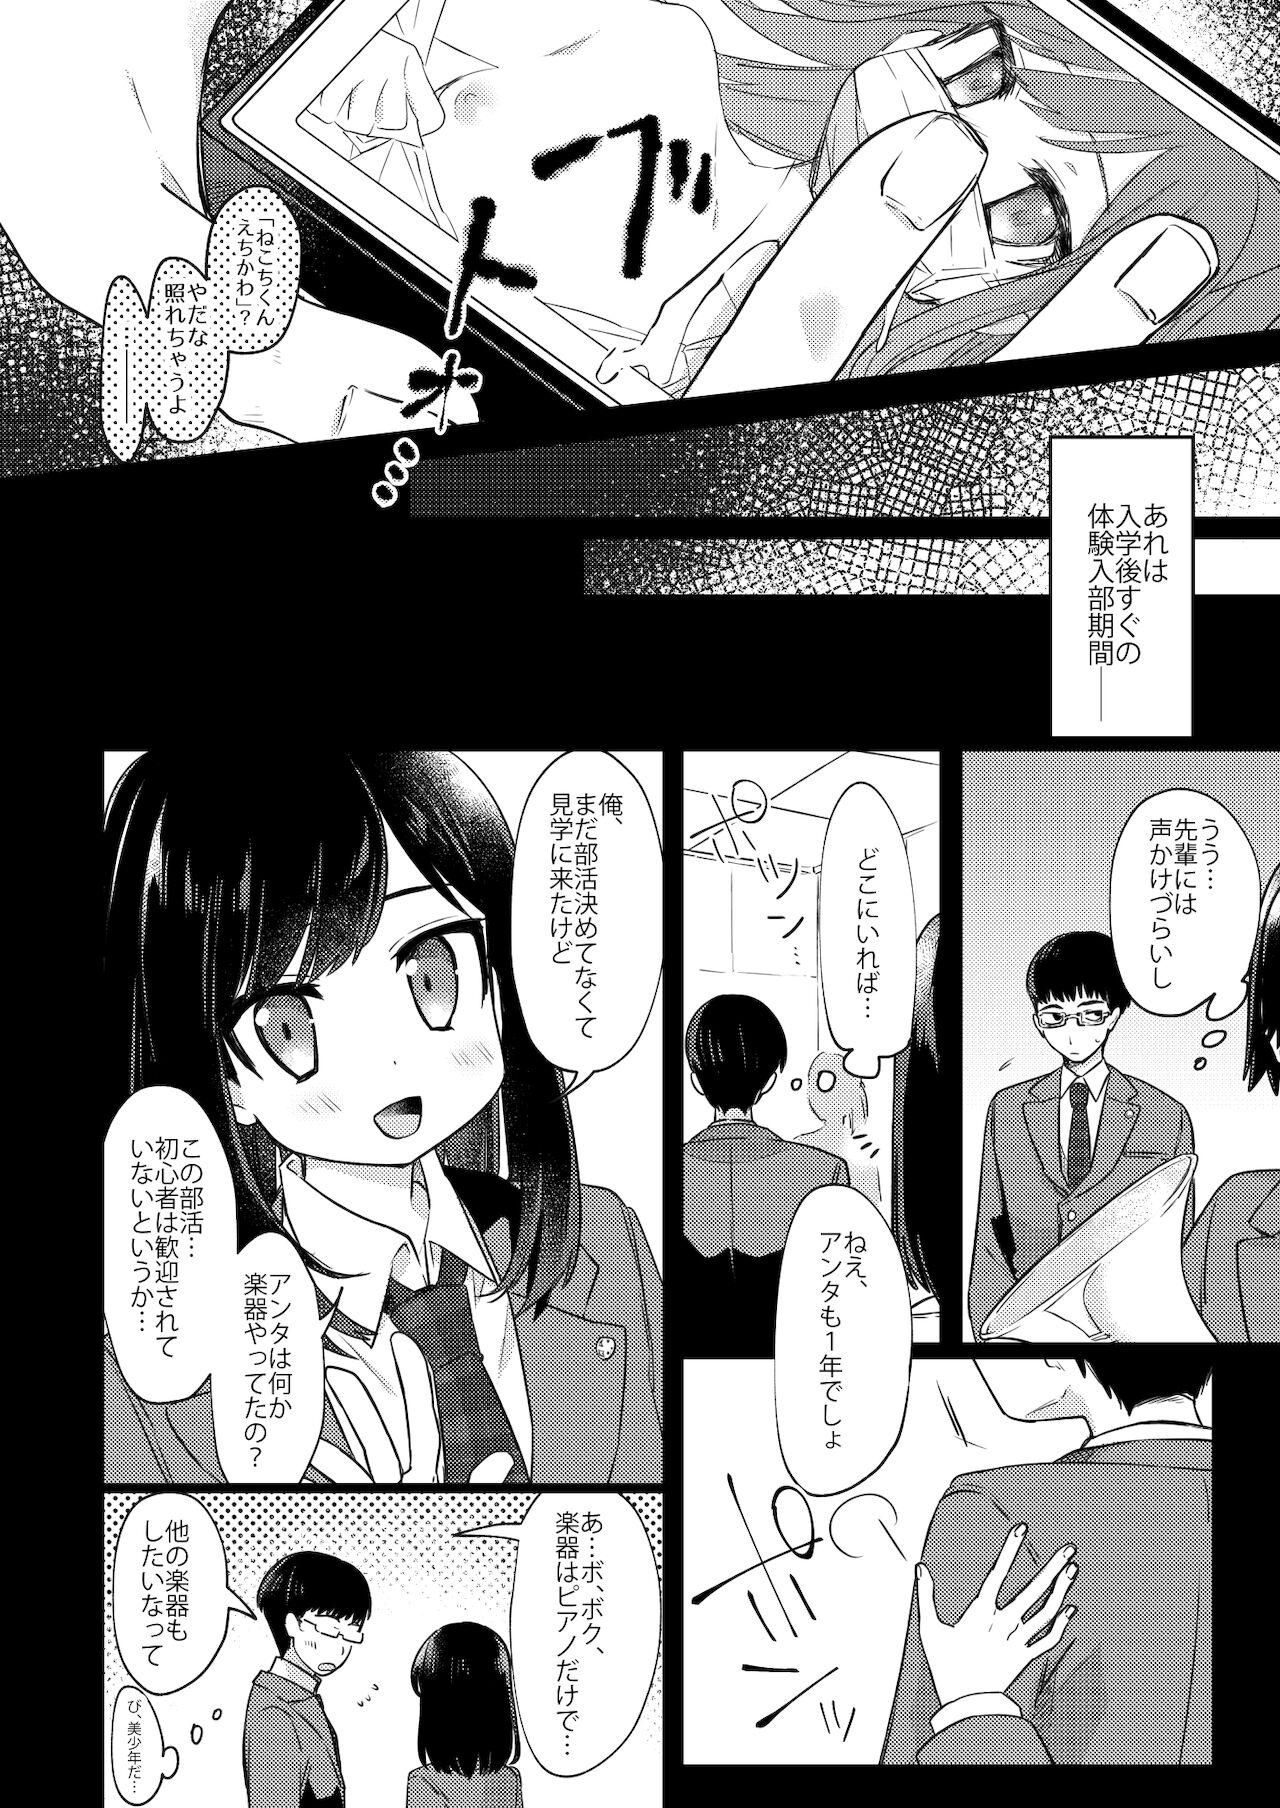 Letsdoeit 女装少年ねこちにガチ恋× - Original Chibola - Page 3